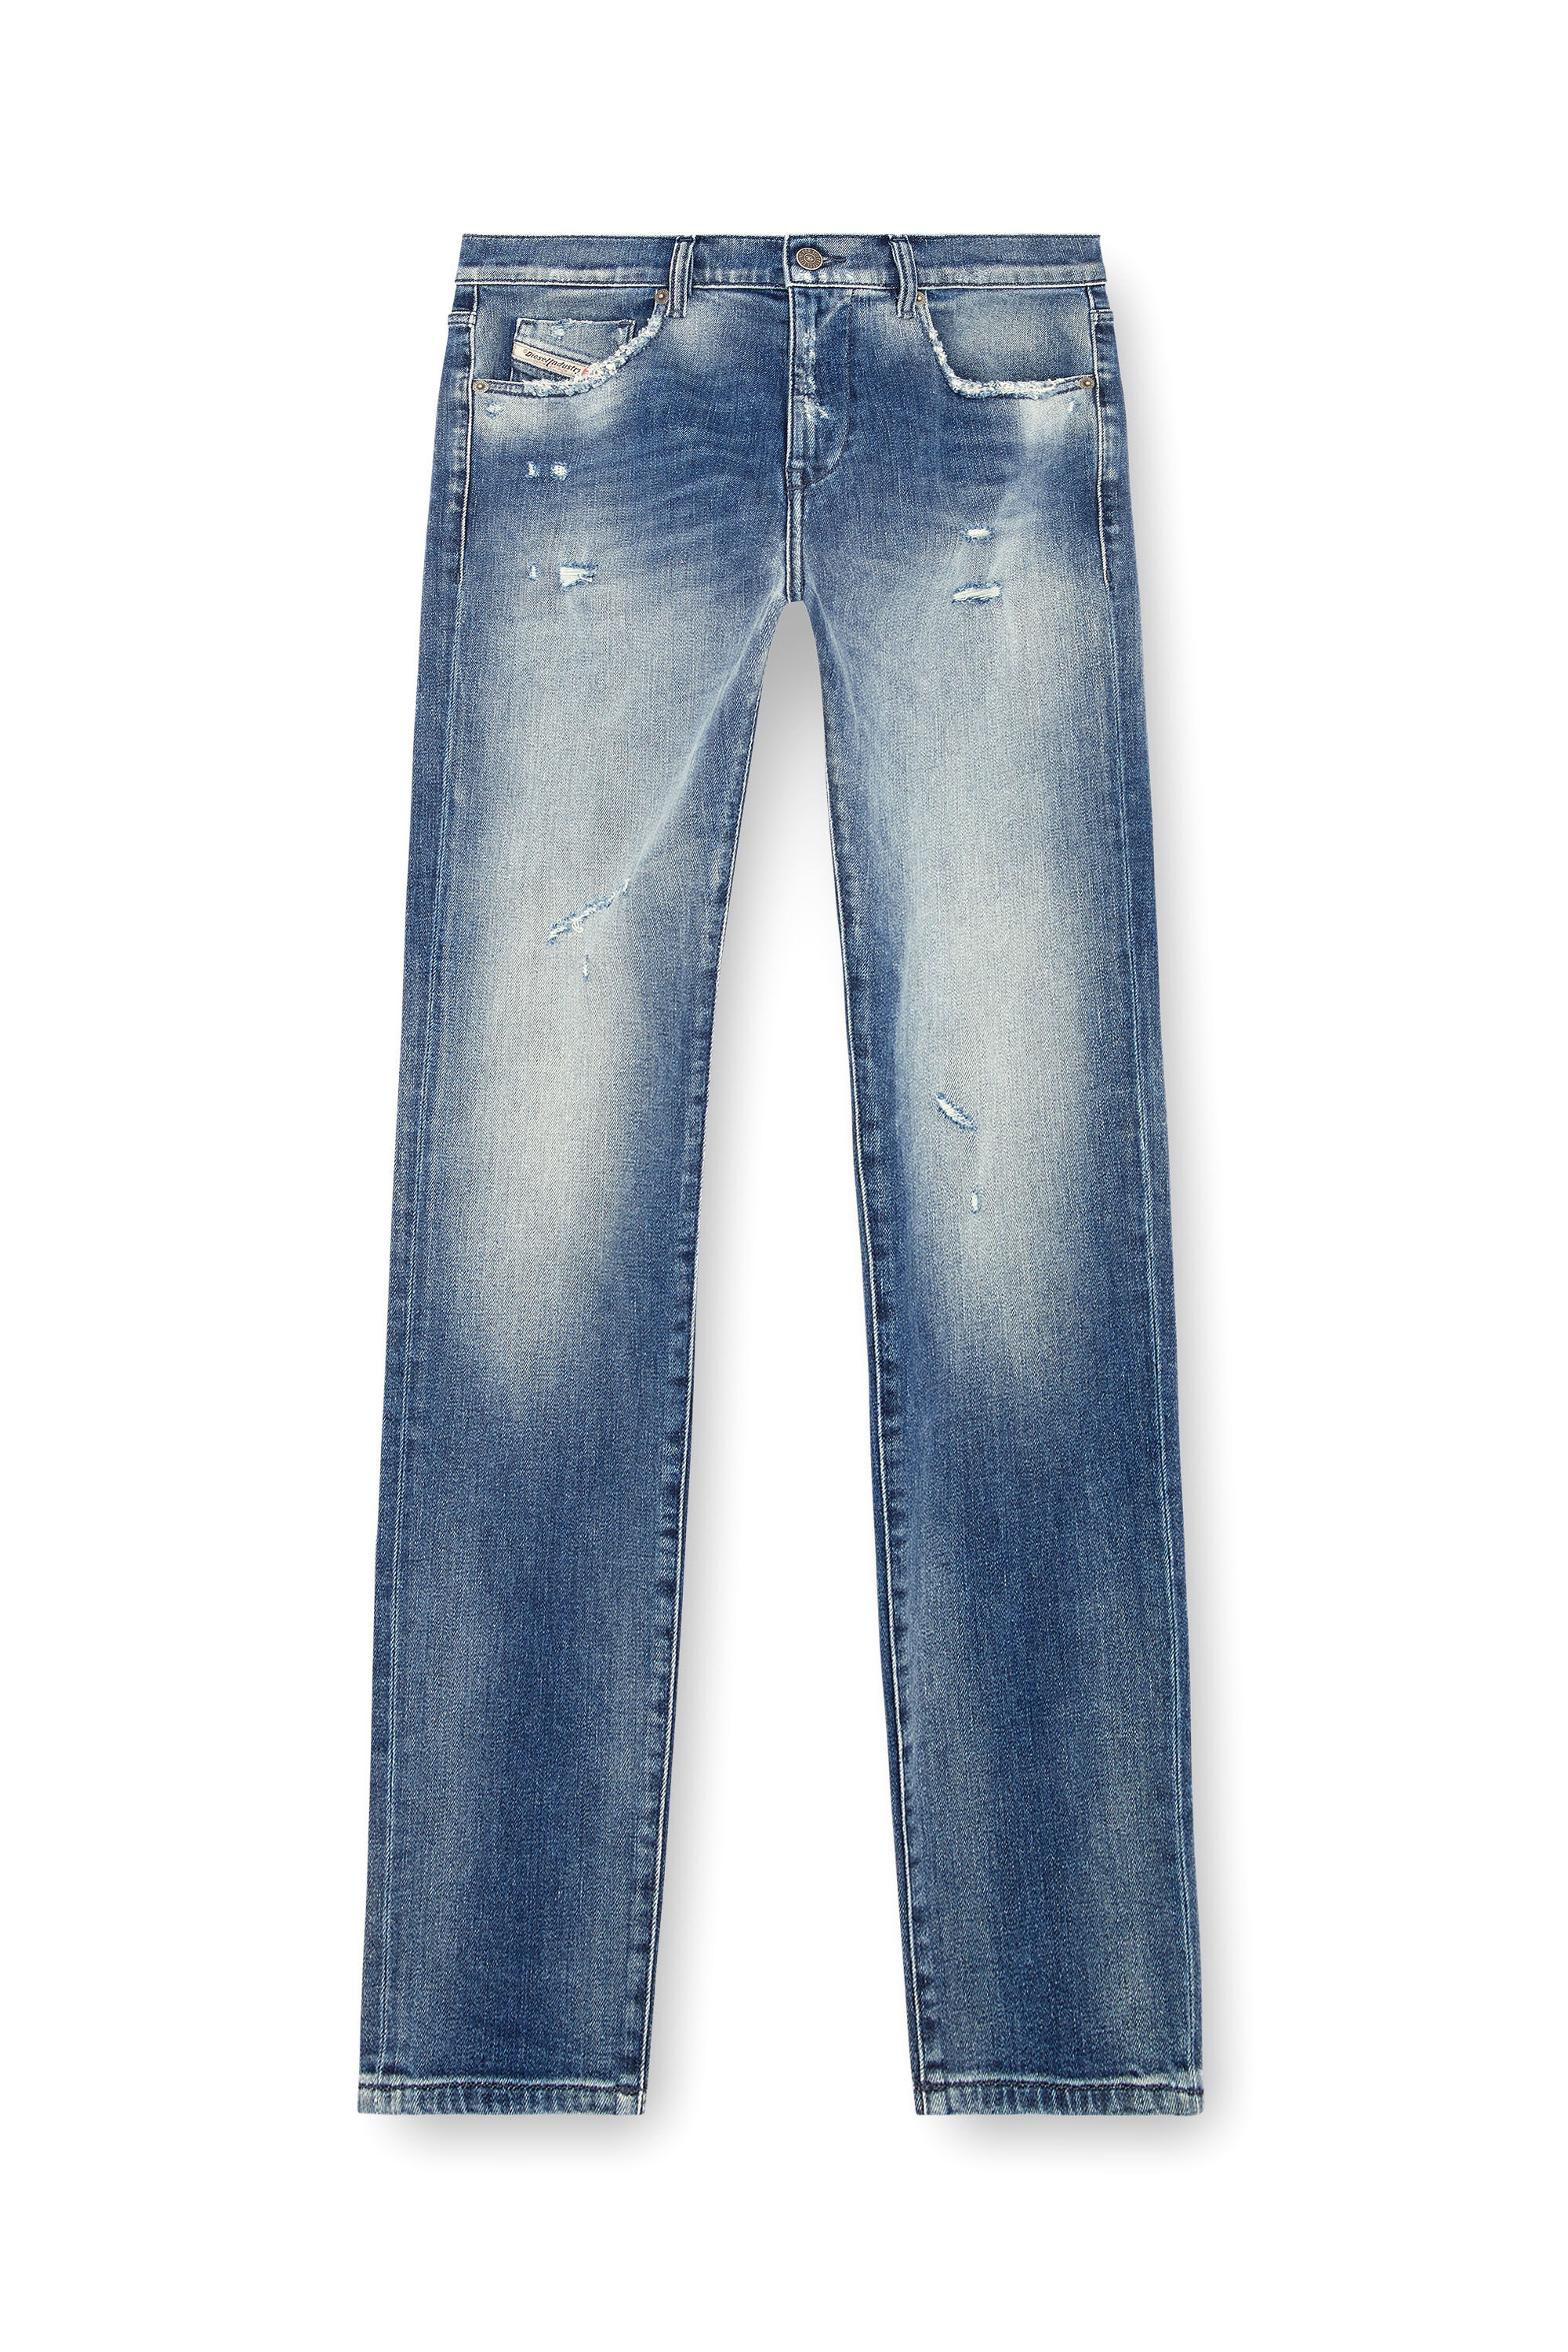 Diesel - Slim Jeans 2019 D-Strukt 09J61, Hombre Slim Jeans - 2019 D-Strukt in Azul marino - Image 2